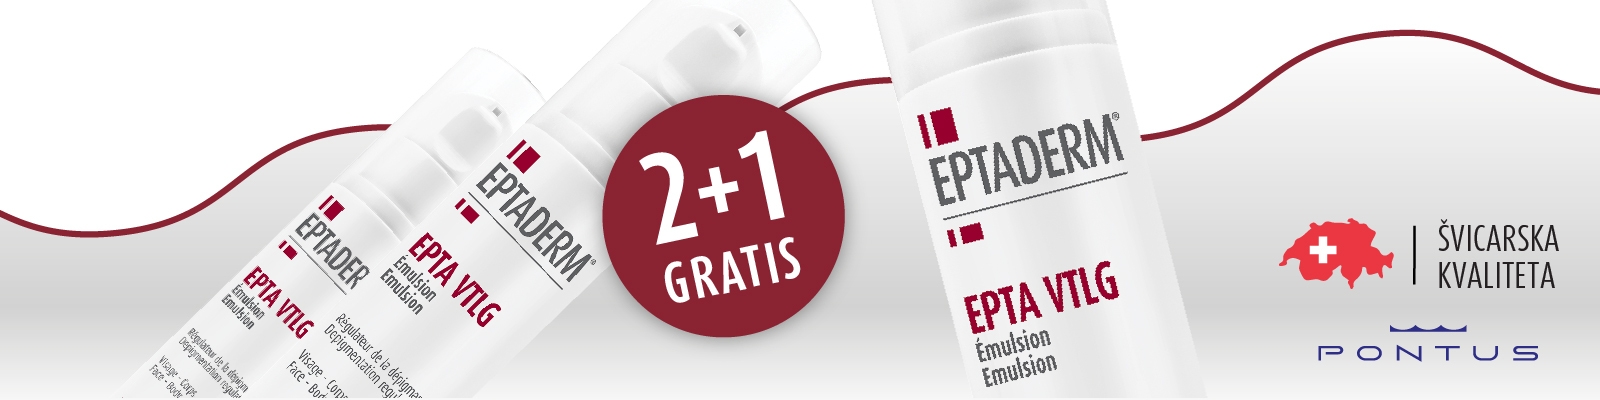 EPTA VTLG 2+1 GRATIS